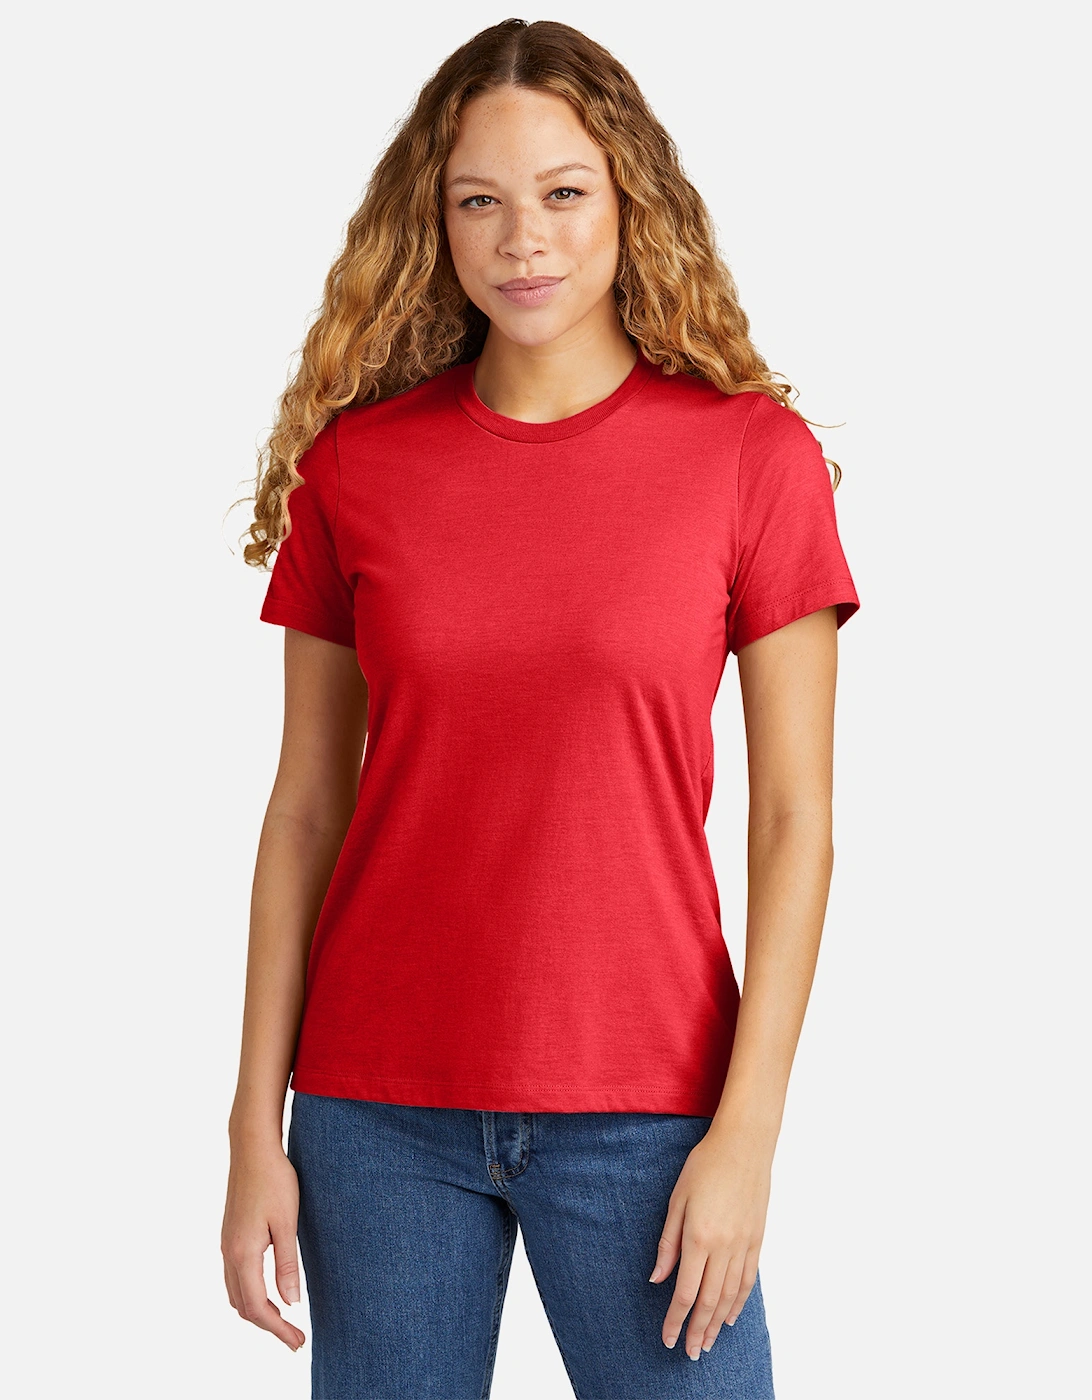 Womens/Ladies CVC Soft Touch T-Shirt